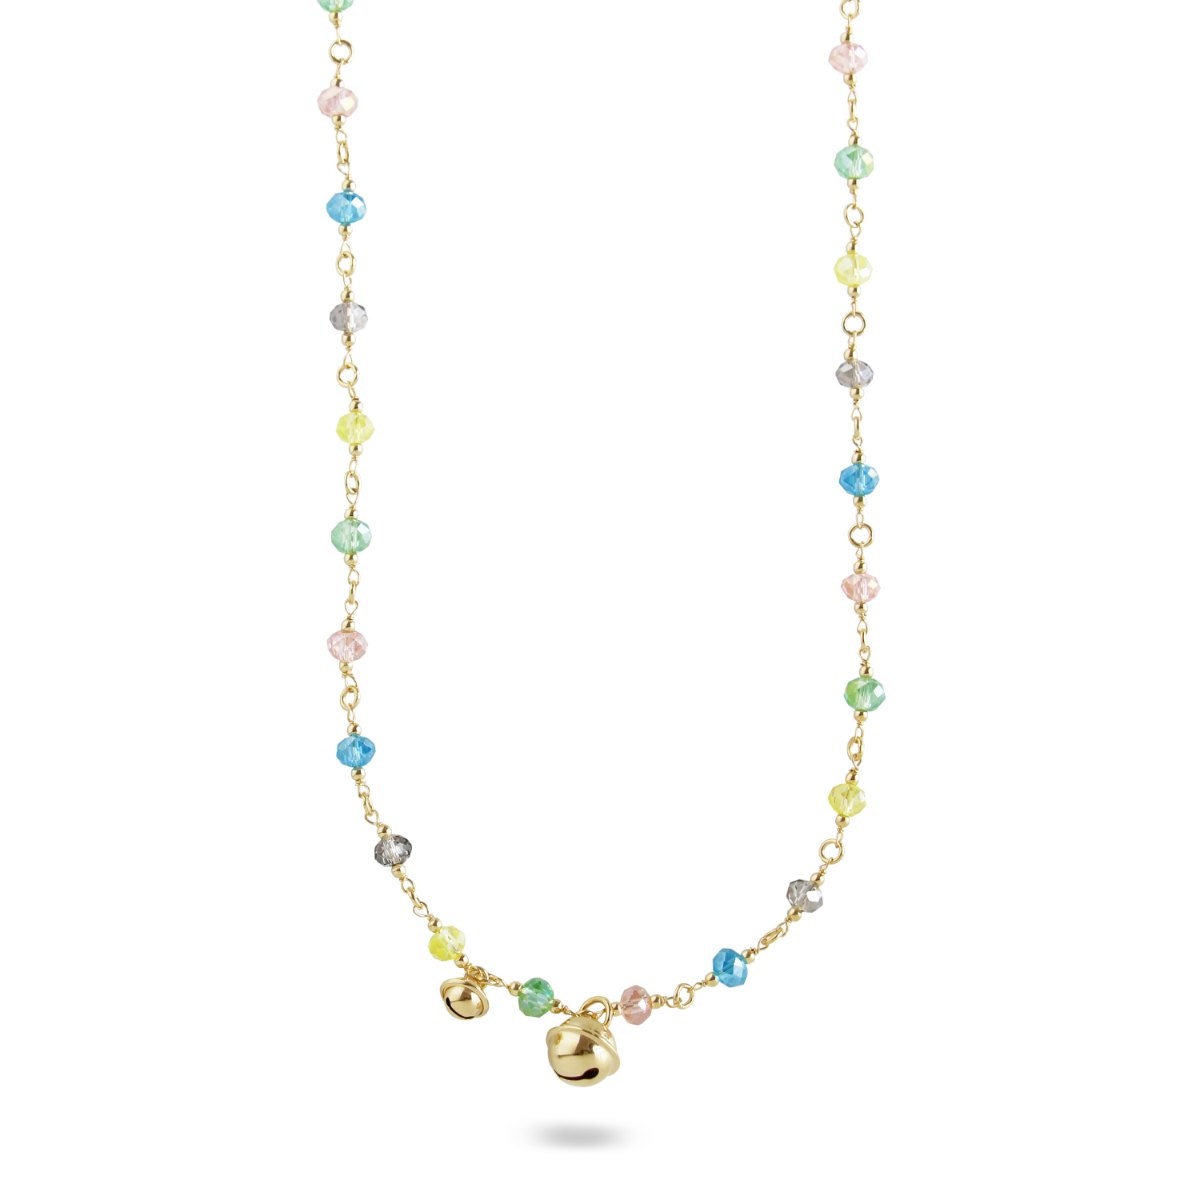 Necklaces - Necklace with bells multicolor crystals - Crystal Rainbow - 1 | Rue des Mille